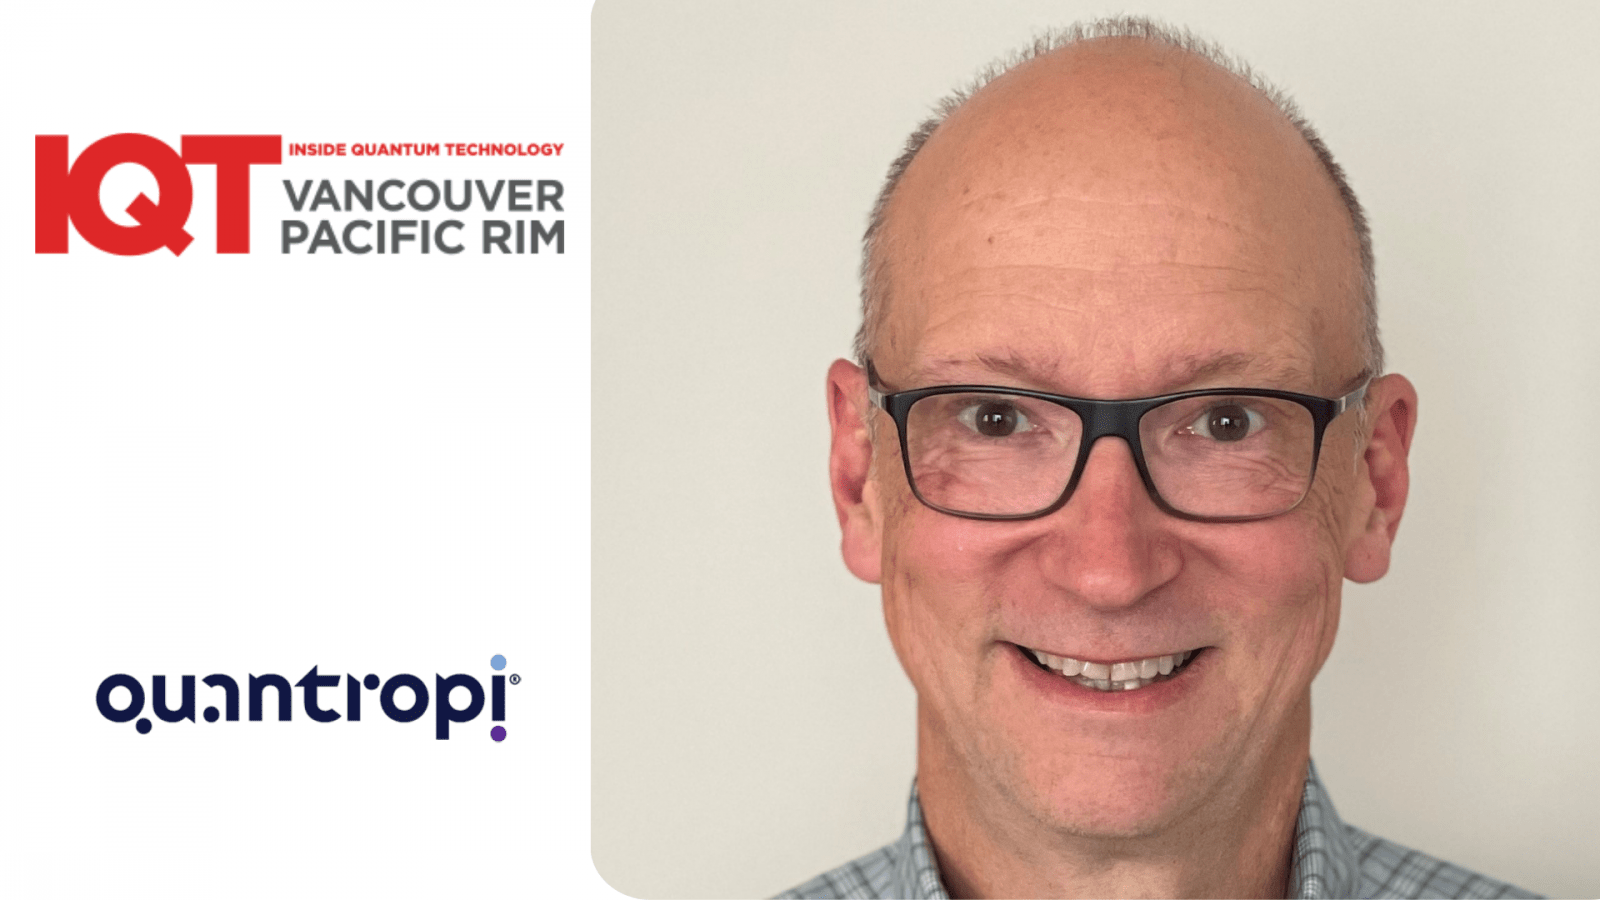 Quantropi CTO Michael Redding is a 2024 Speaker for IQT Vancouver/Pacific Rim - Inside Quantum Technology